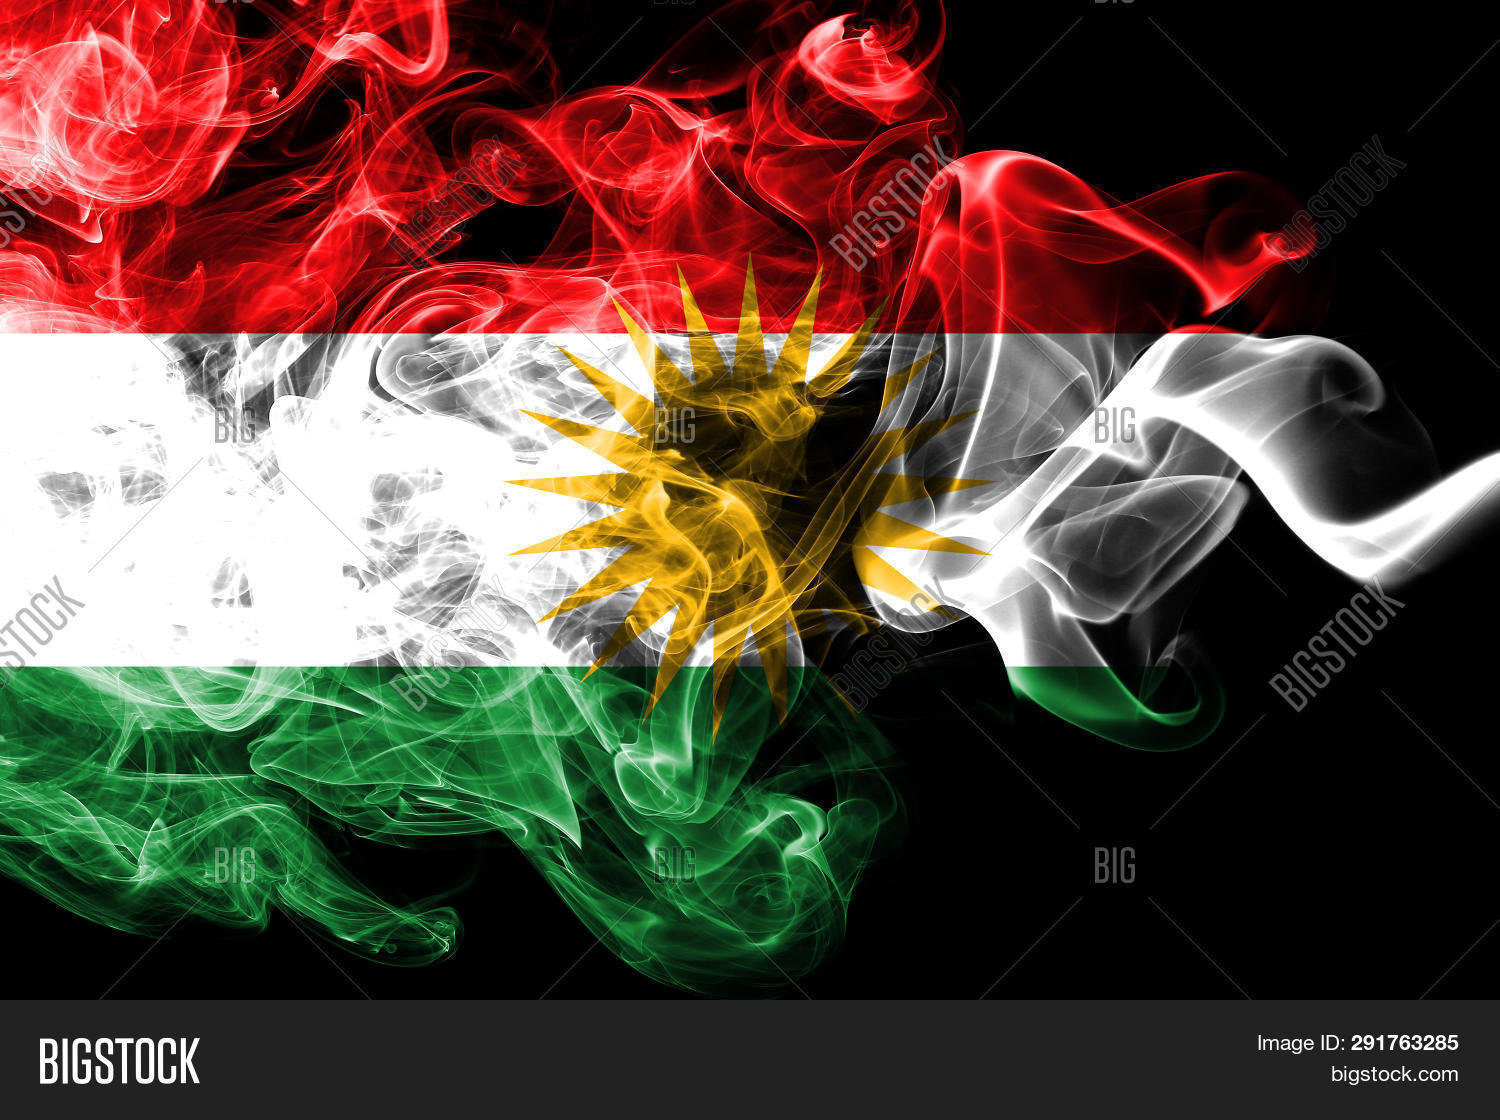 Kurdistan Smoke Flag Image Photo Free Trial Bigstock